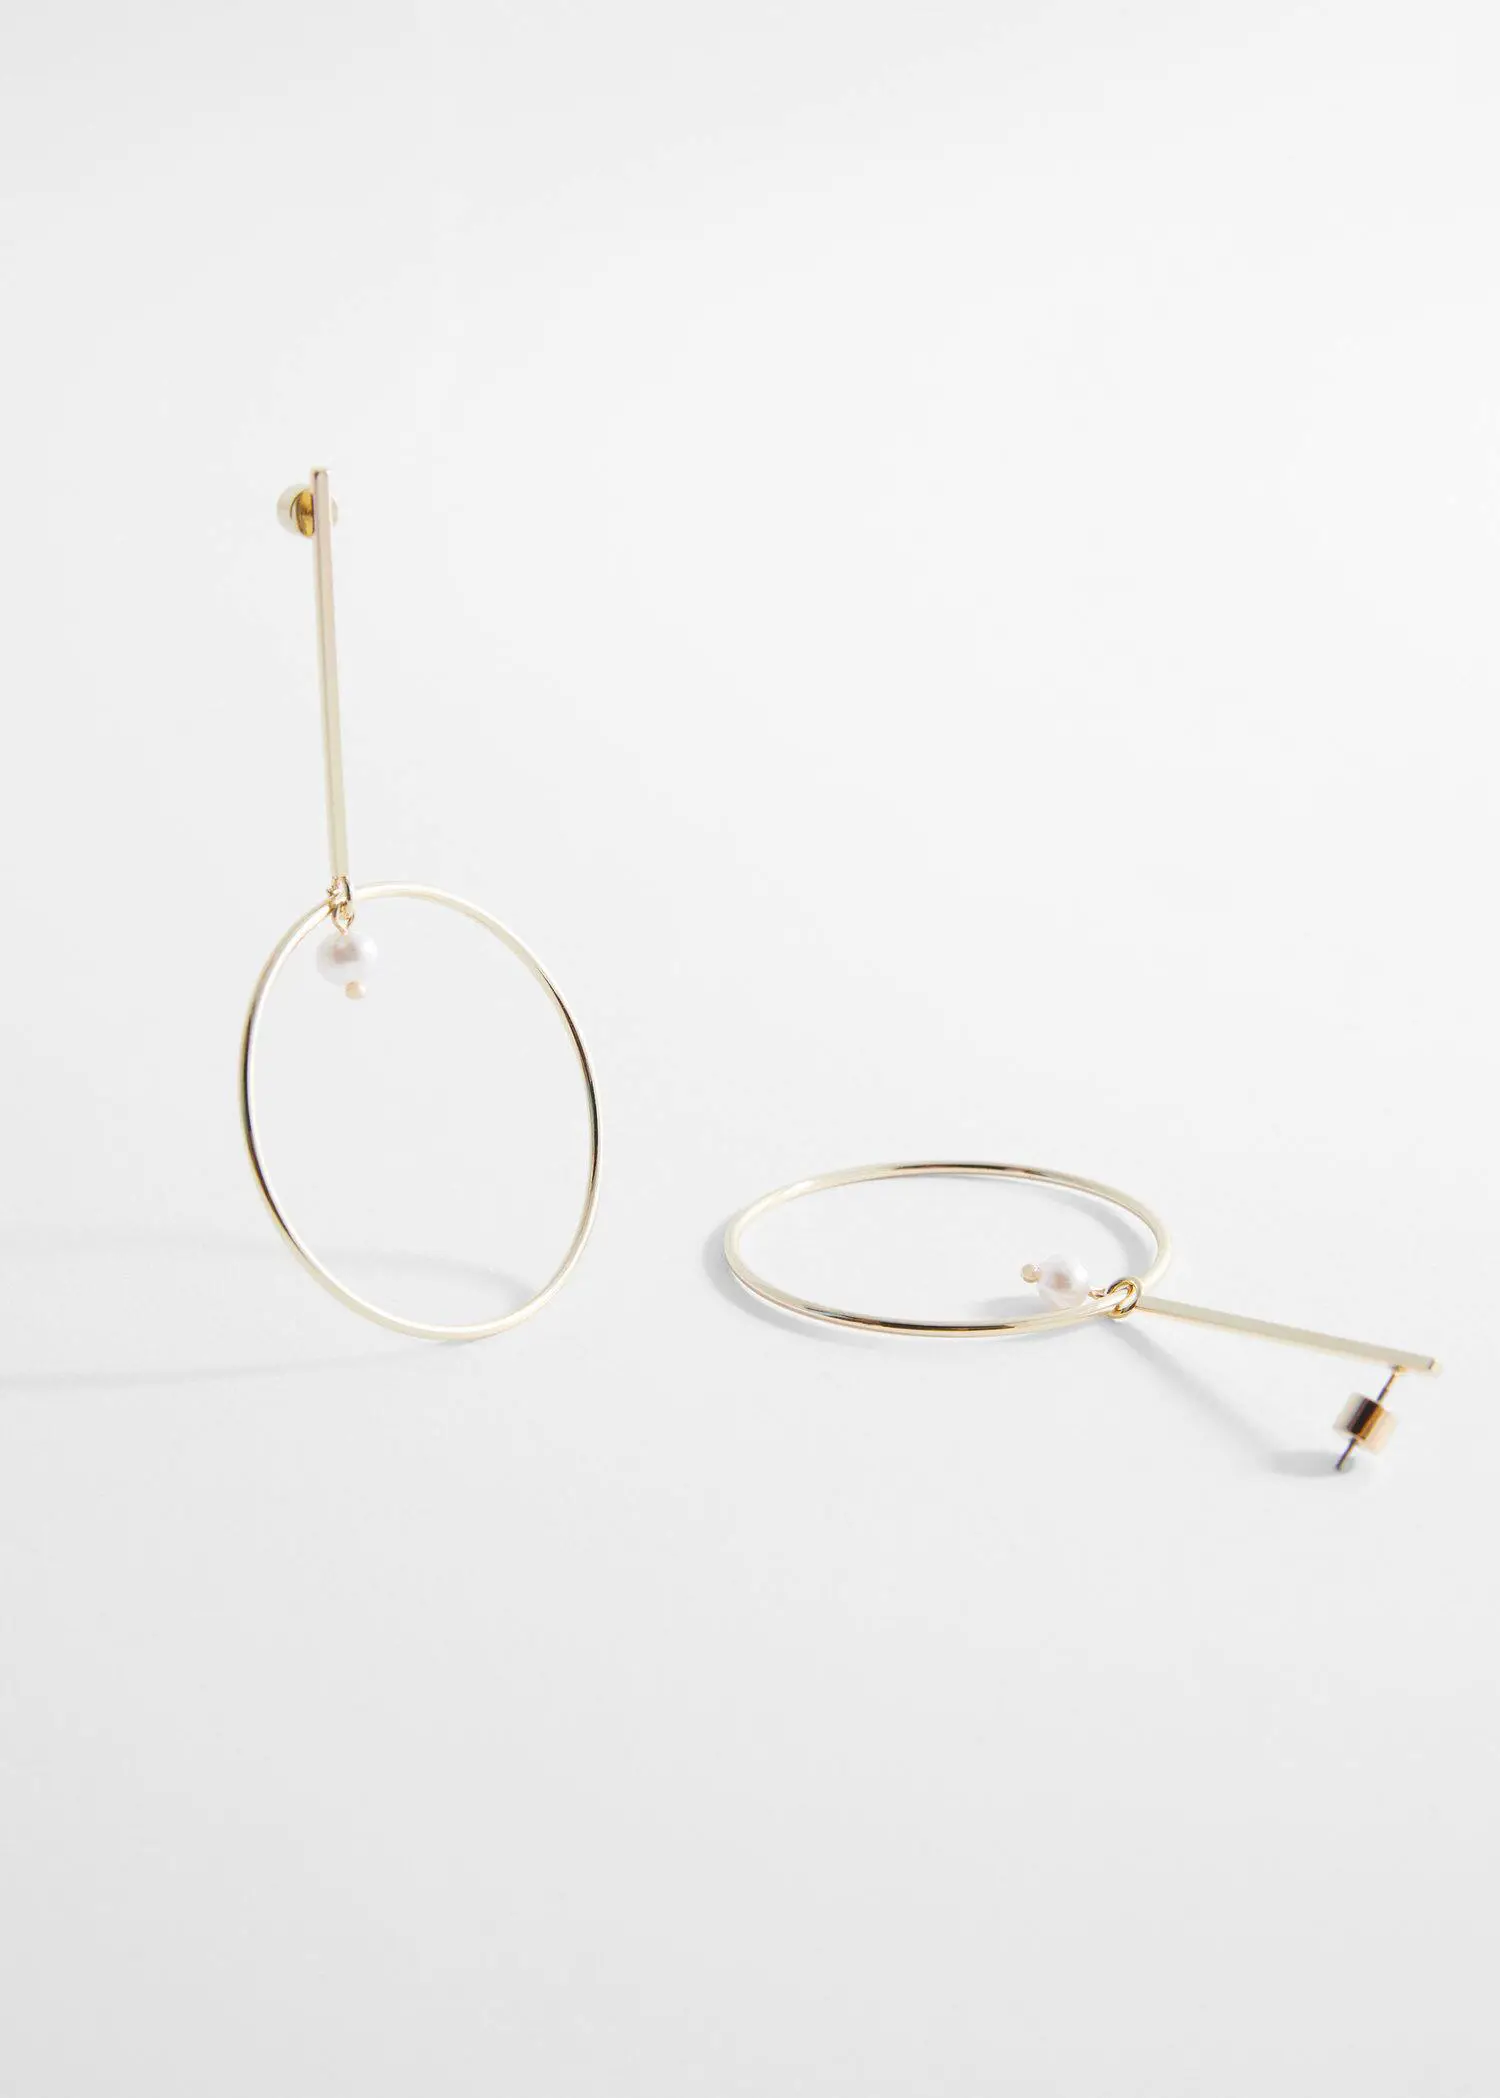 Mango Thread hoop earrings. a pair of earrings sitting on top of a white table. 